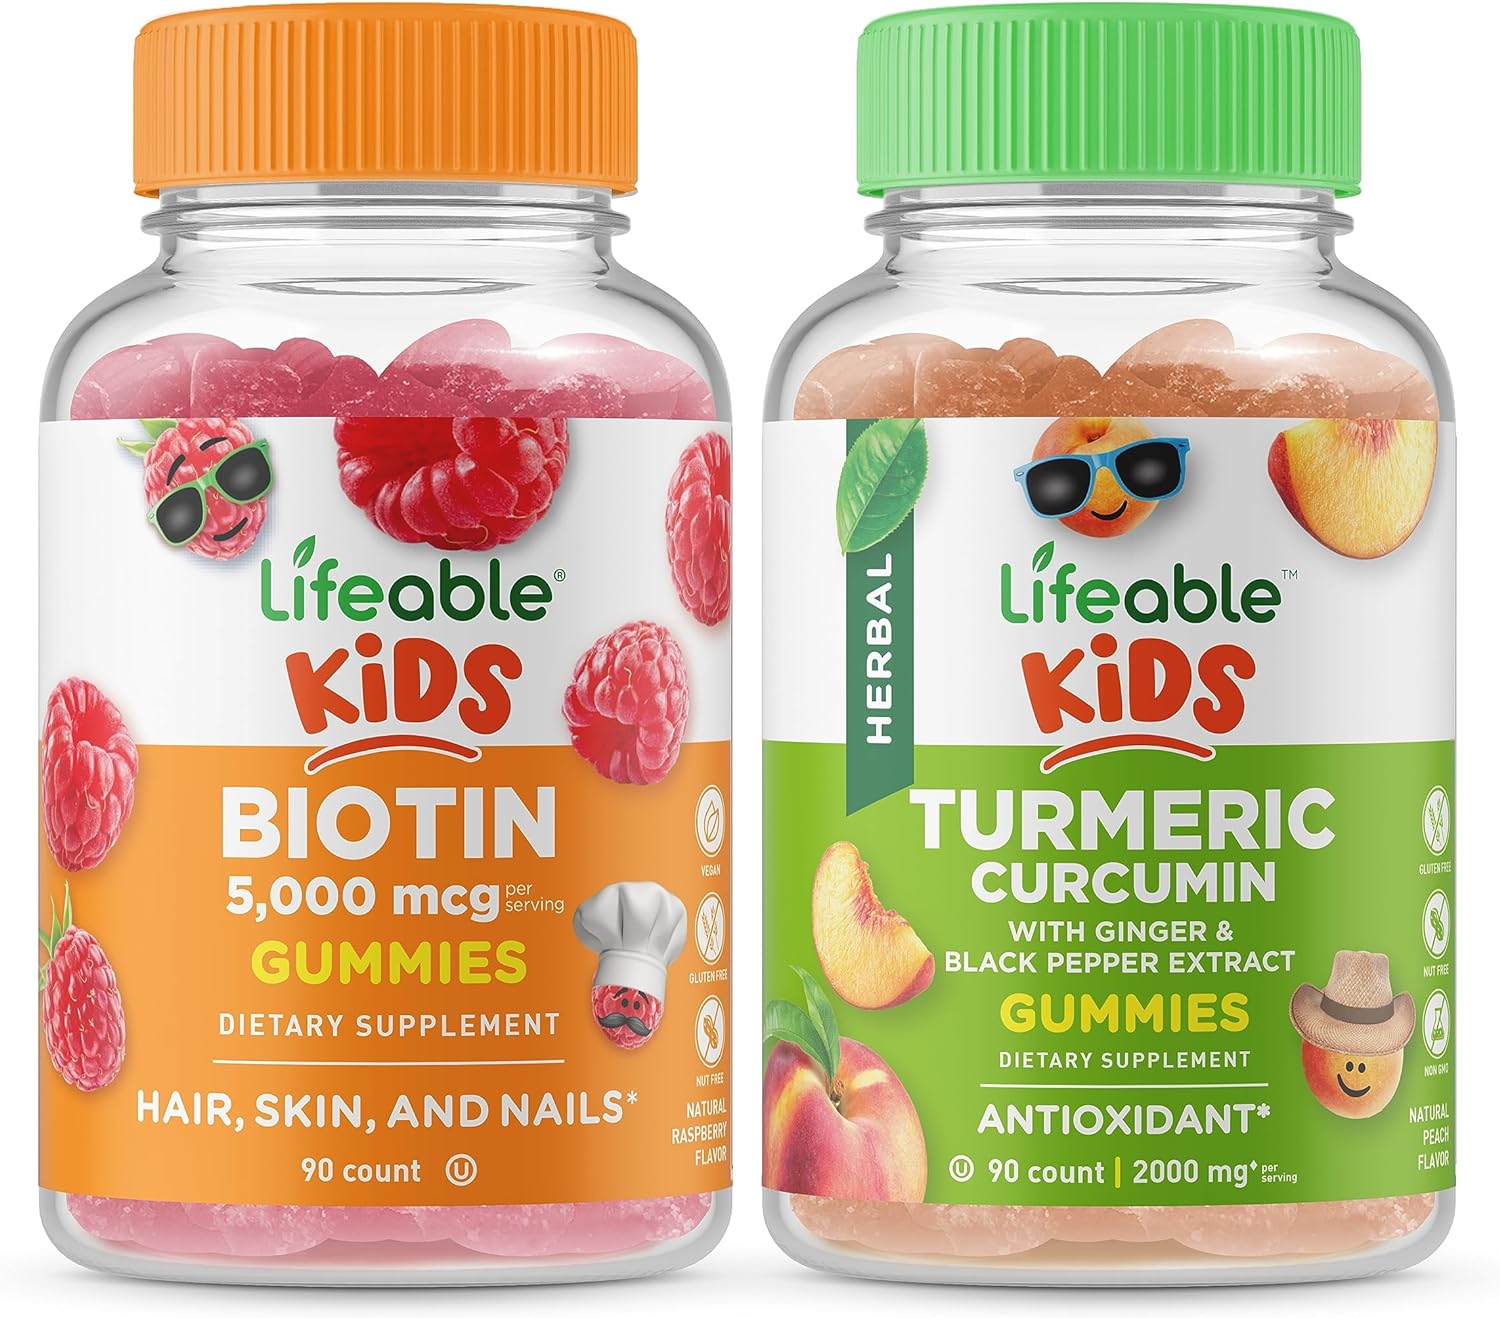 Lifeable Biotin Kids + Turmeric Curcumin Kids, Gummies Bundle - Great Tasting, Vitamin Supplement, Gluten Free, GMO Free, Chewable Gummy